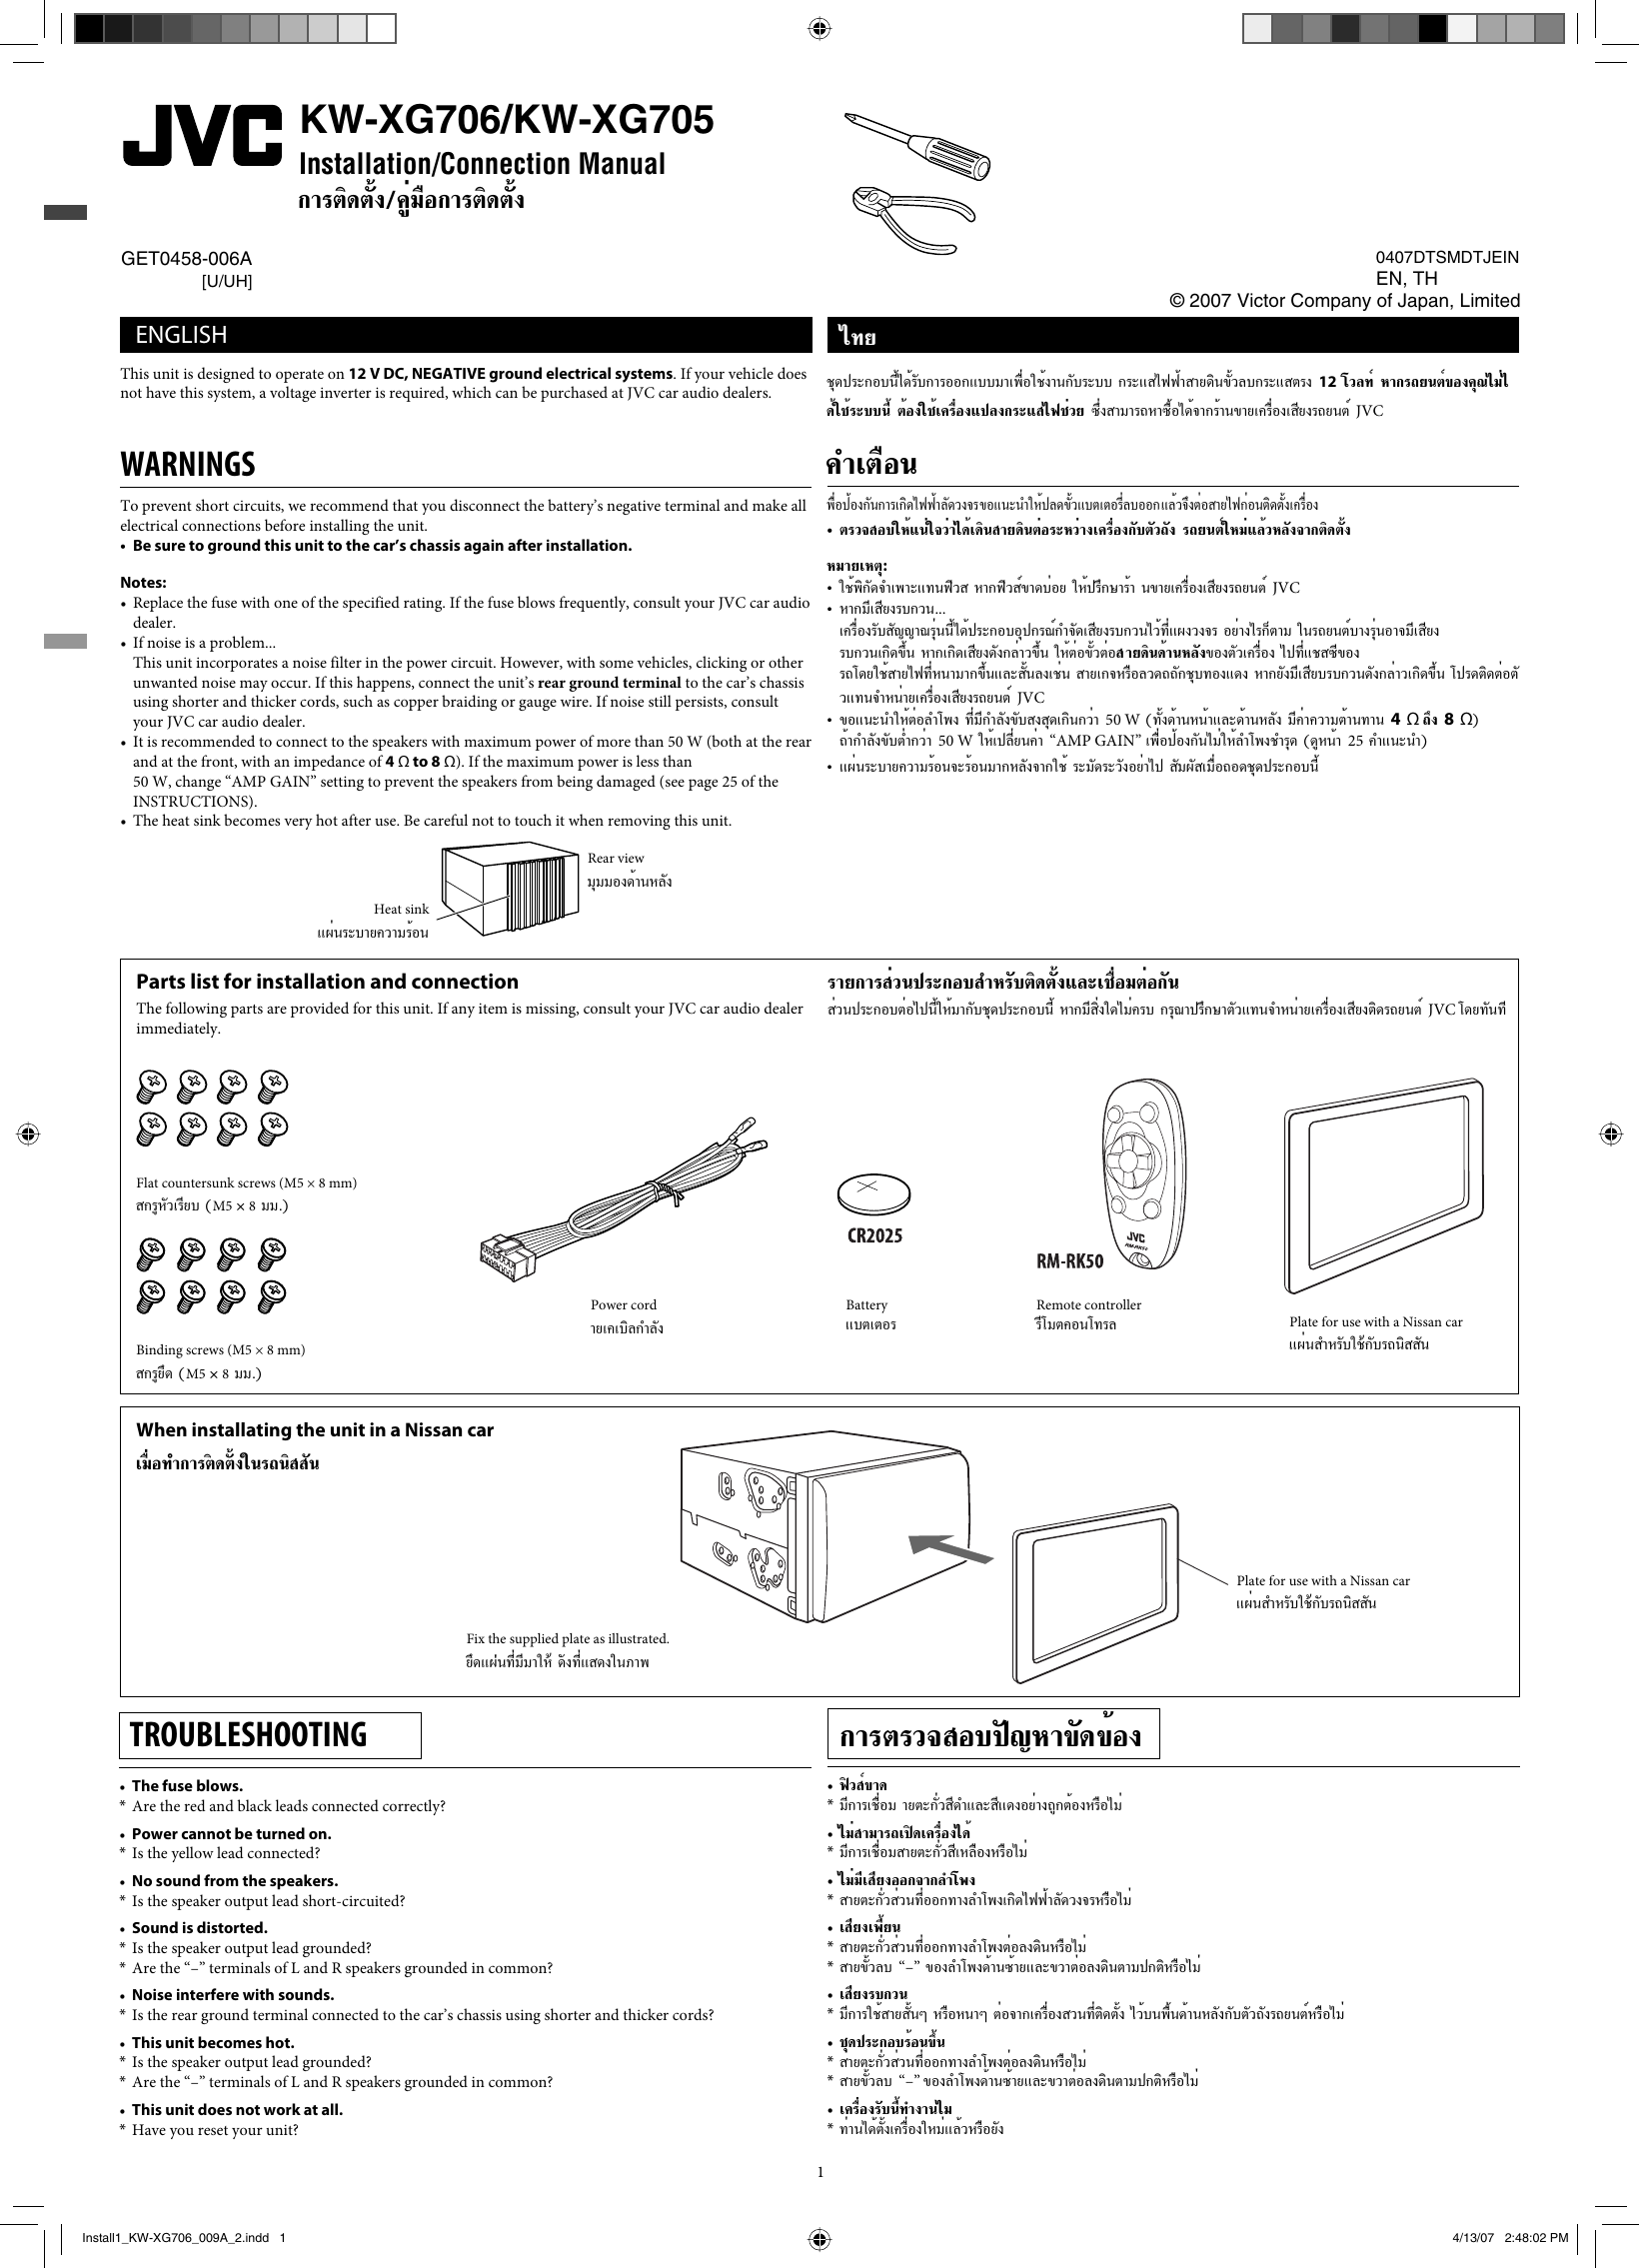 Page 1 of 4 - JVC KW-XG705U/UH Install1_KW-XG706_009A_2 User Manual GET0458-006A